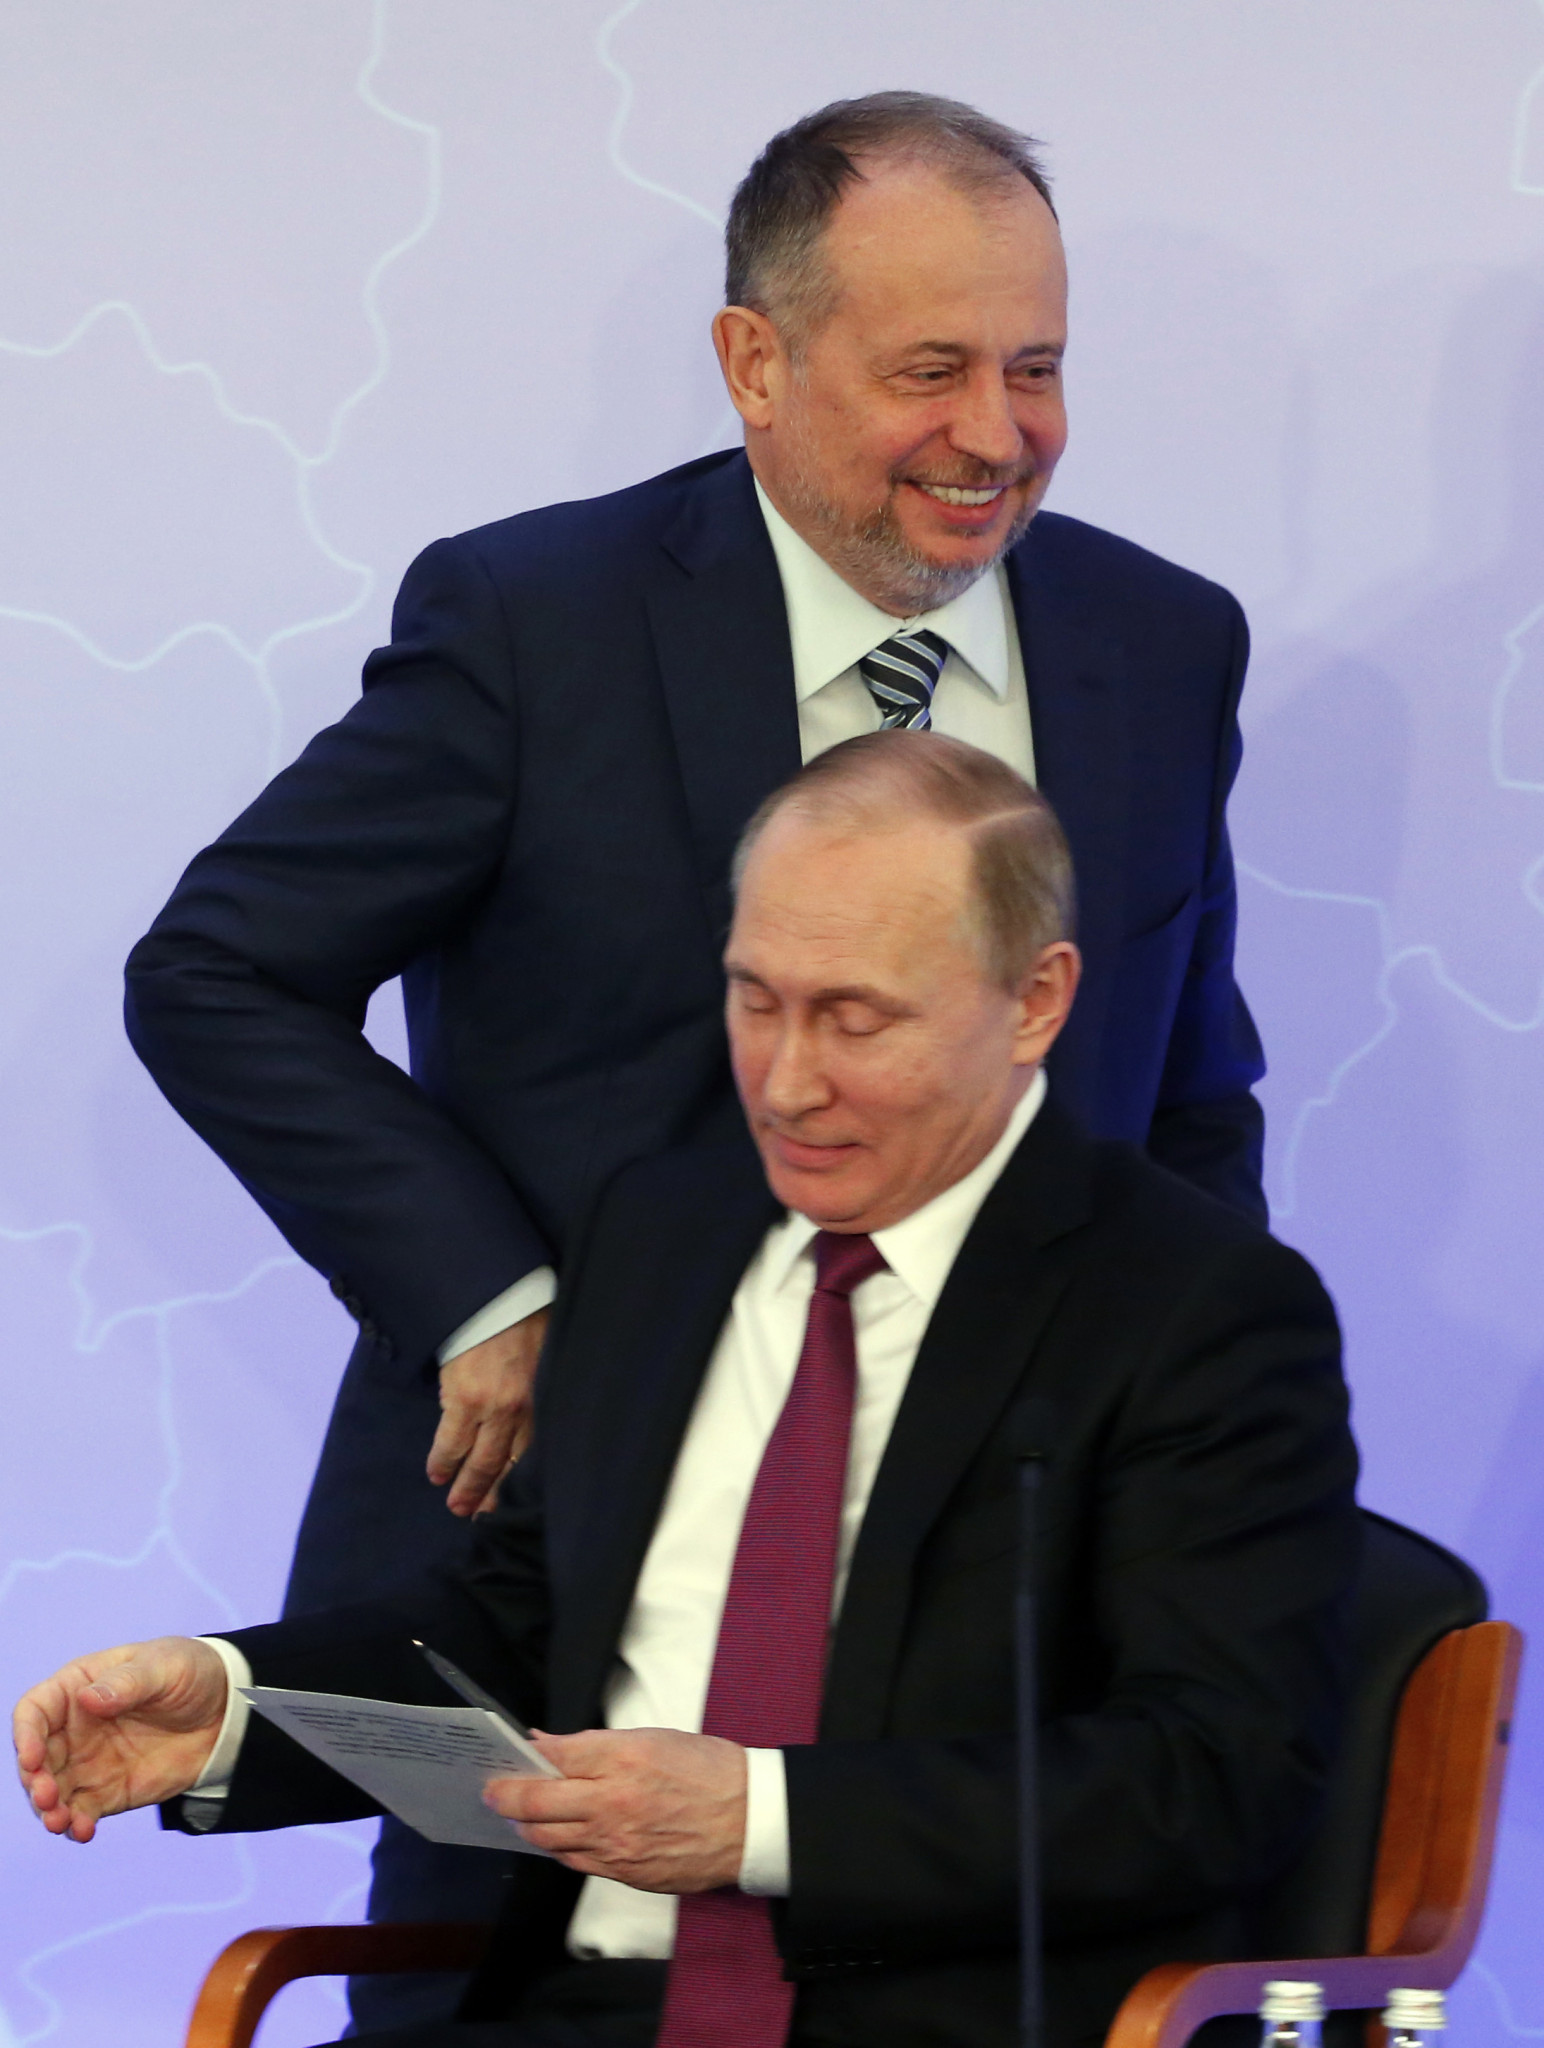 Vladimir Lisin, seen here behind Russian President Vladimir Putin, won the ISSF Presidency ©Getty Images